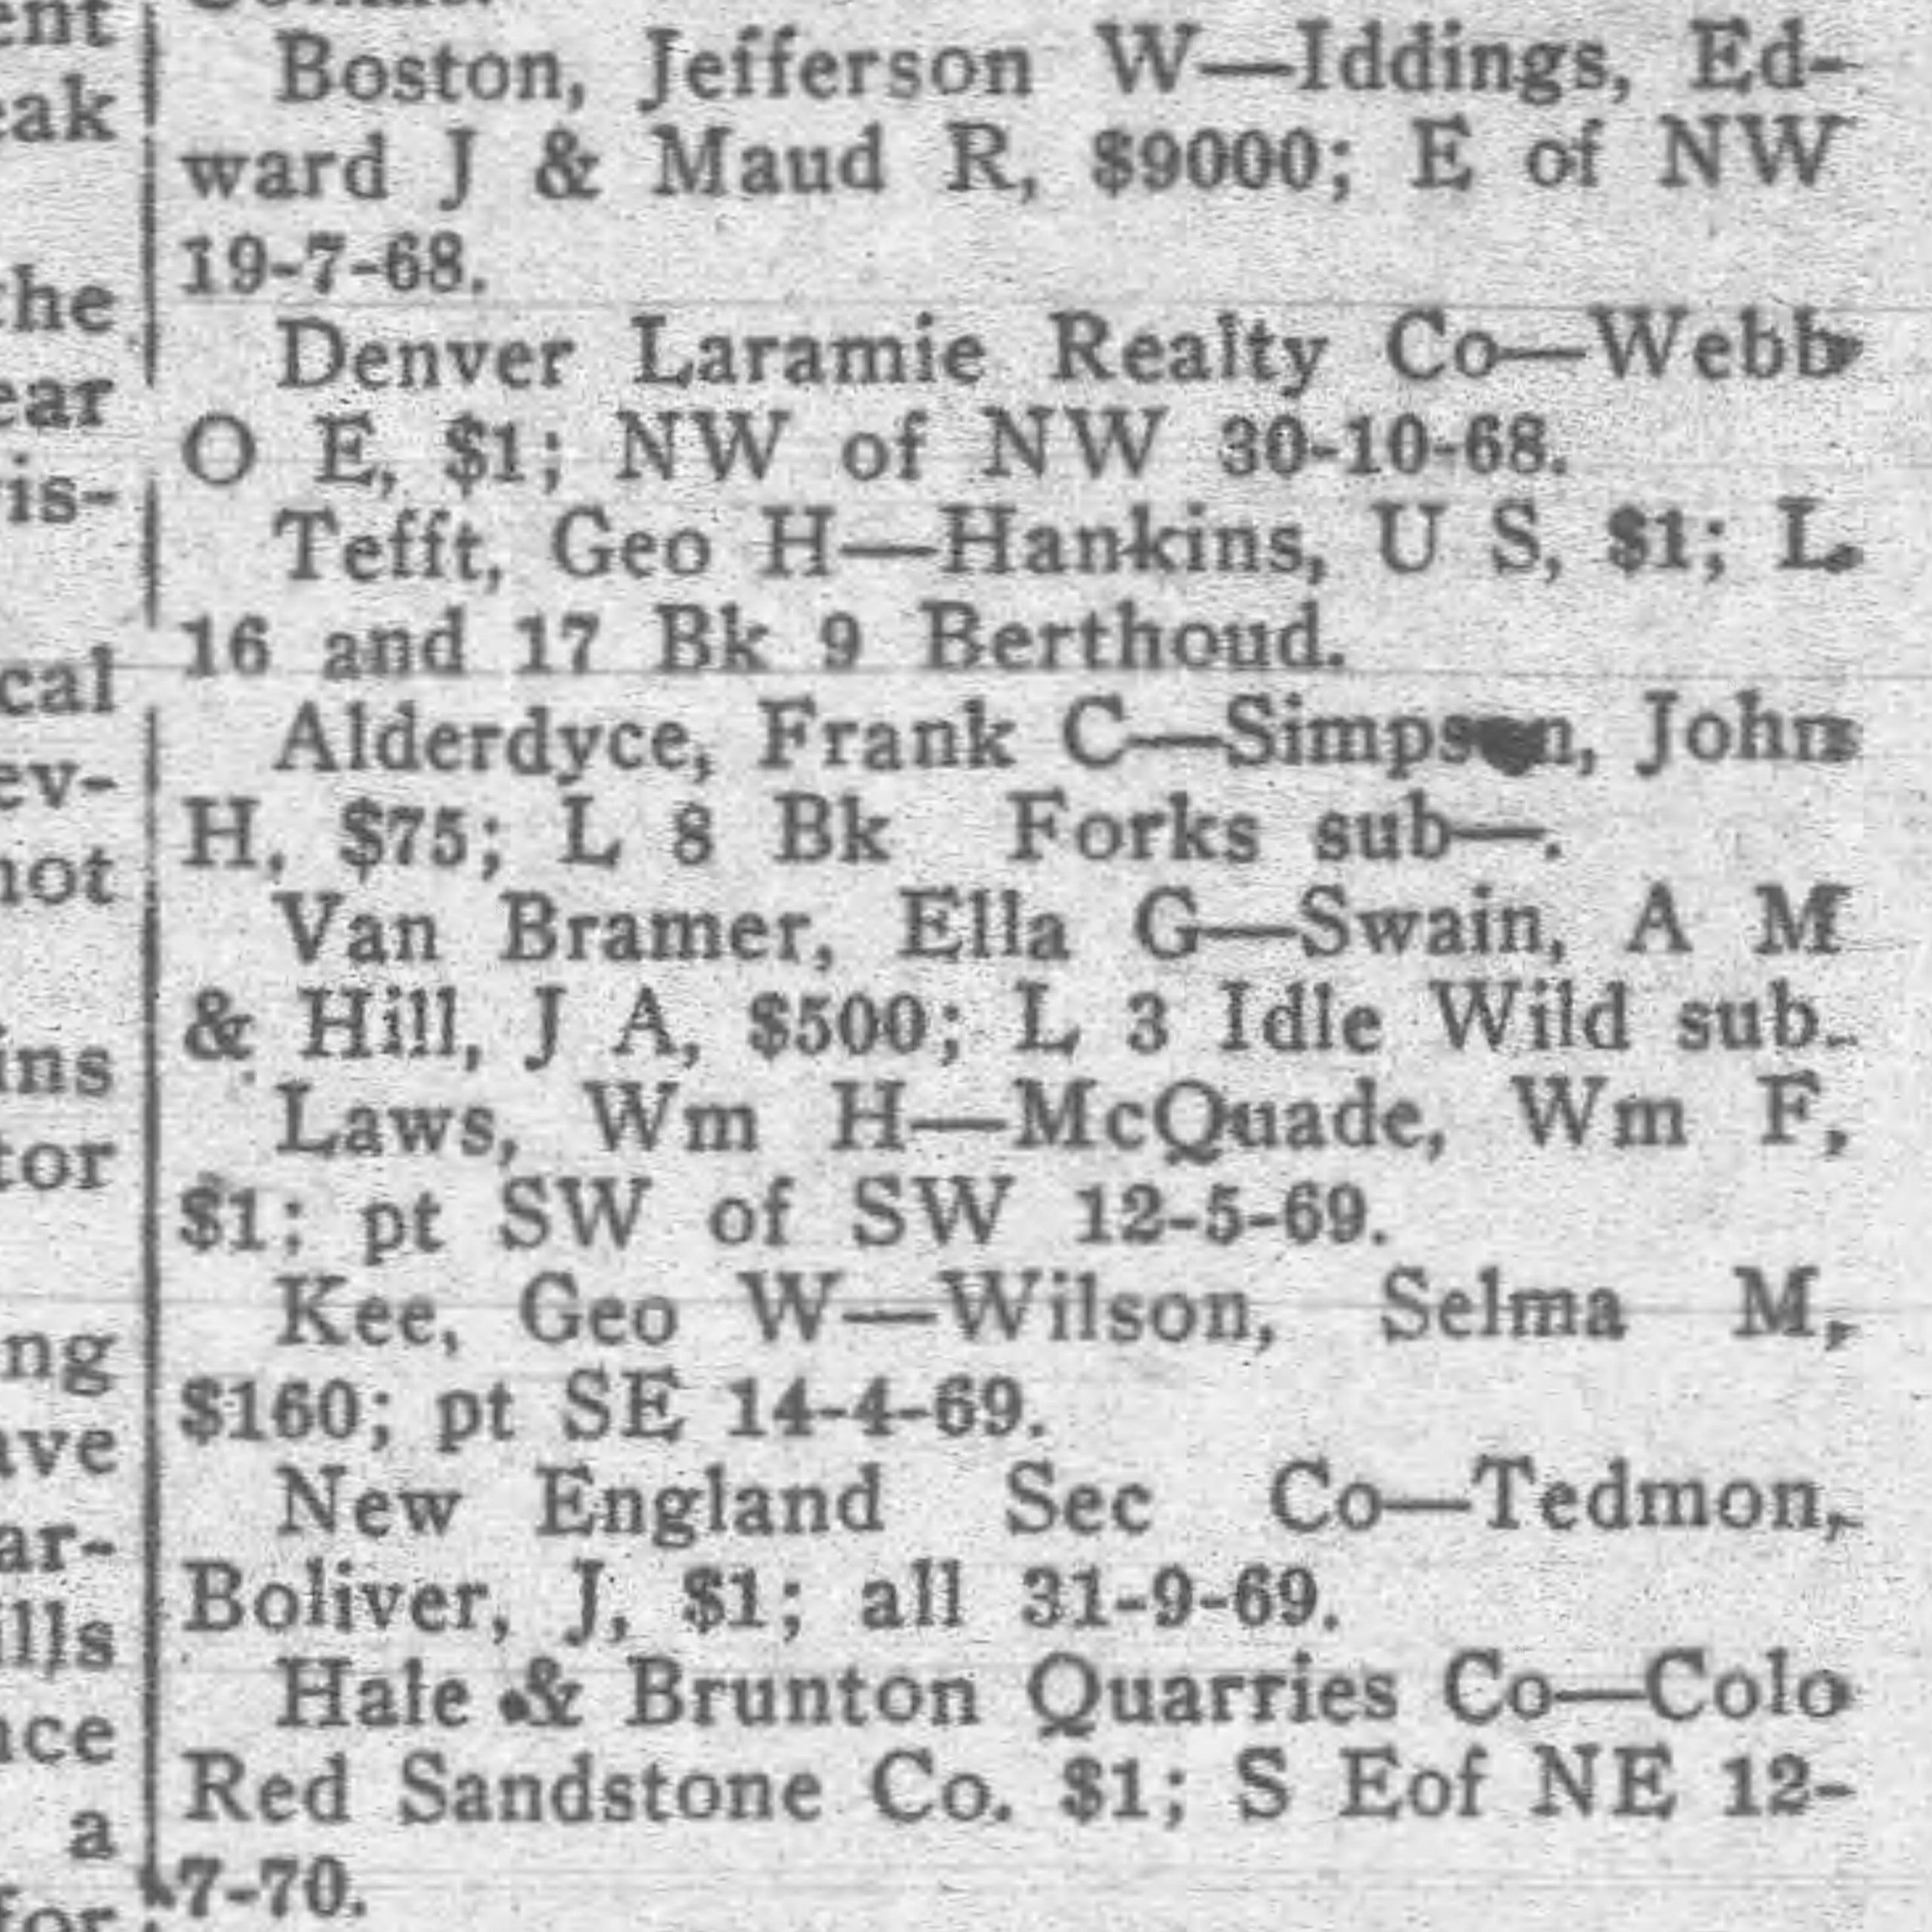 Idlewild Lodge - idlewildlodge.github.io - 1911-05-18 - The Fort Collins Express - Ella Van Bramer sells Idlewild to AM Swain and JA Hill